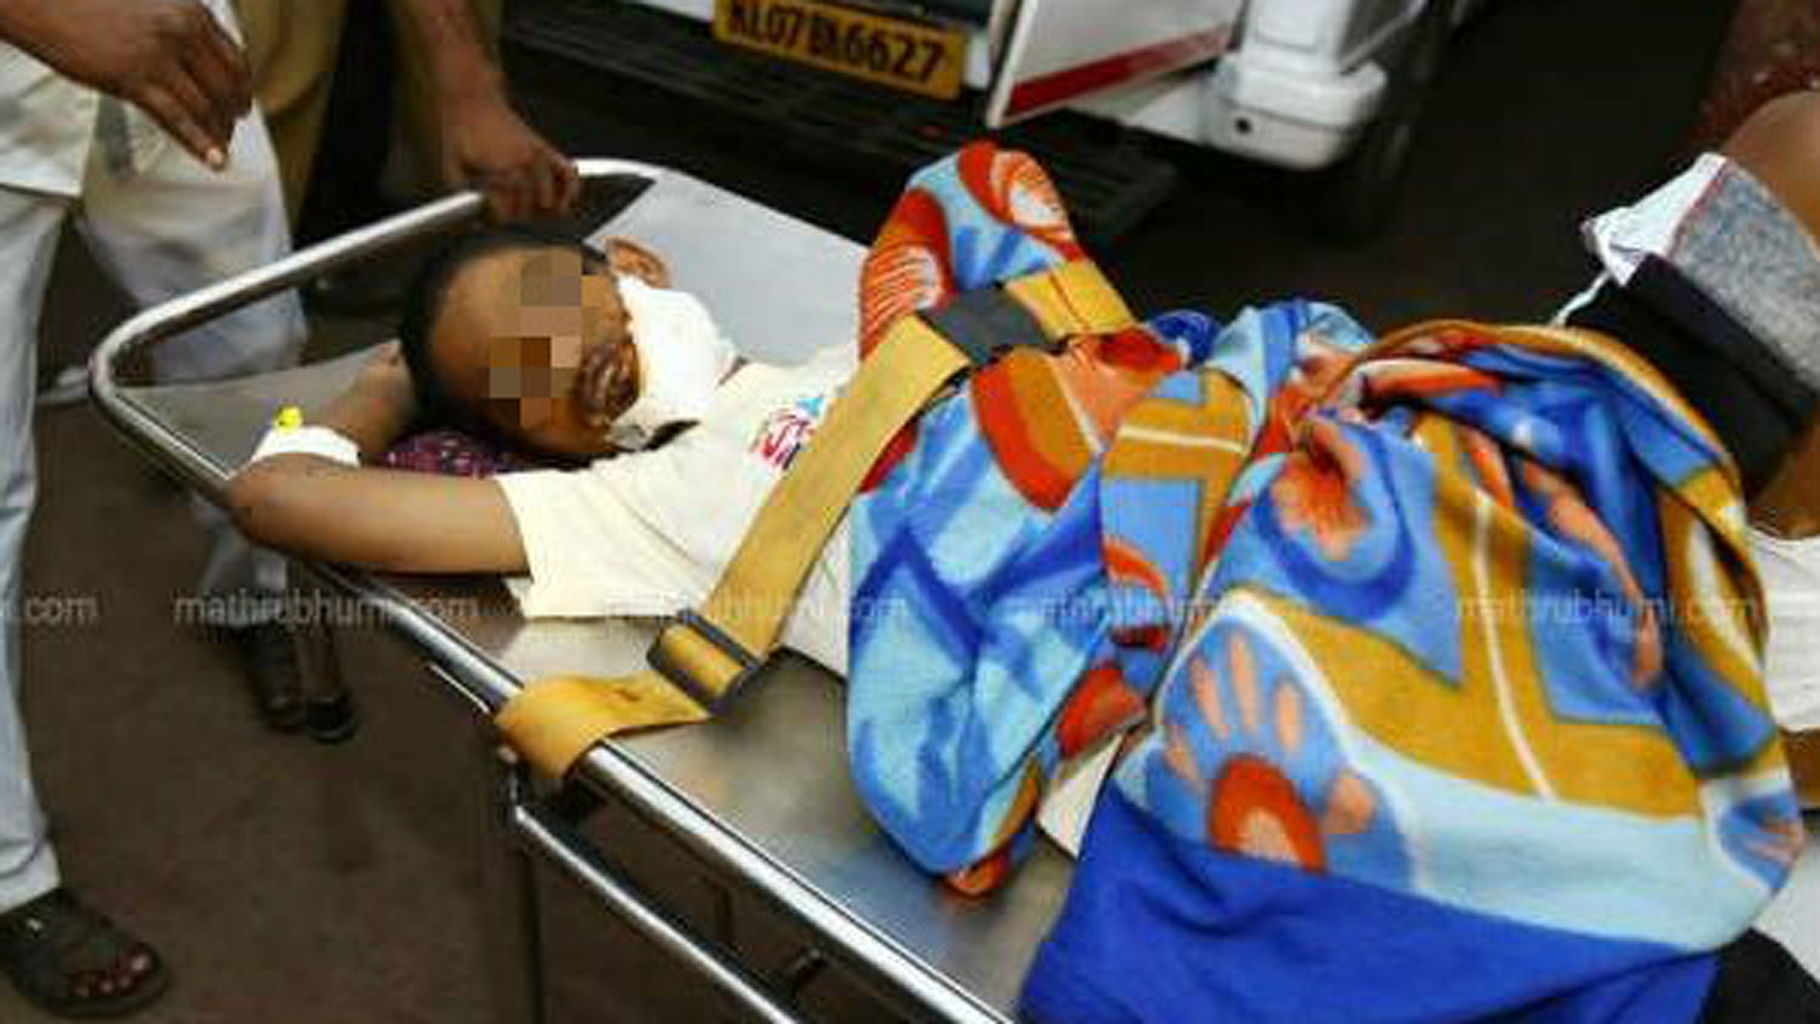 Noufal, the nine-year-old victim of child abuse. <i>(</i>Photo Courtesy:  <a href="http://www.mathrubhumi.com/">Mathrubhumi News<i>)</i></a>